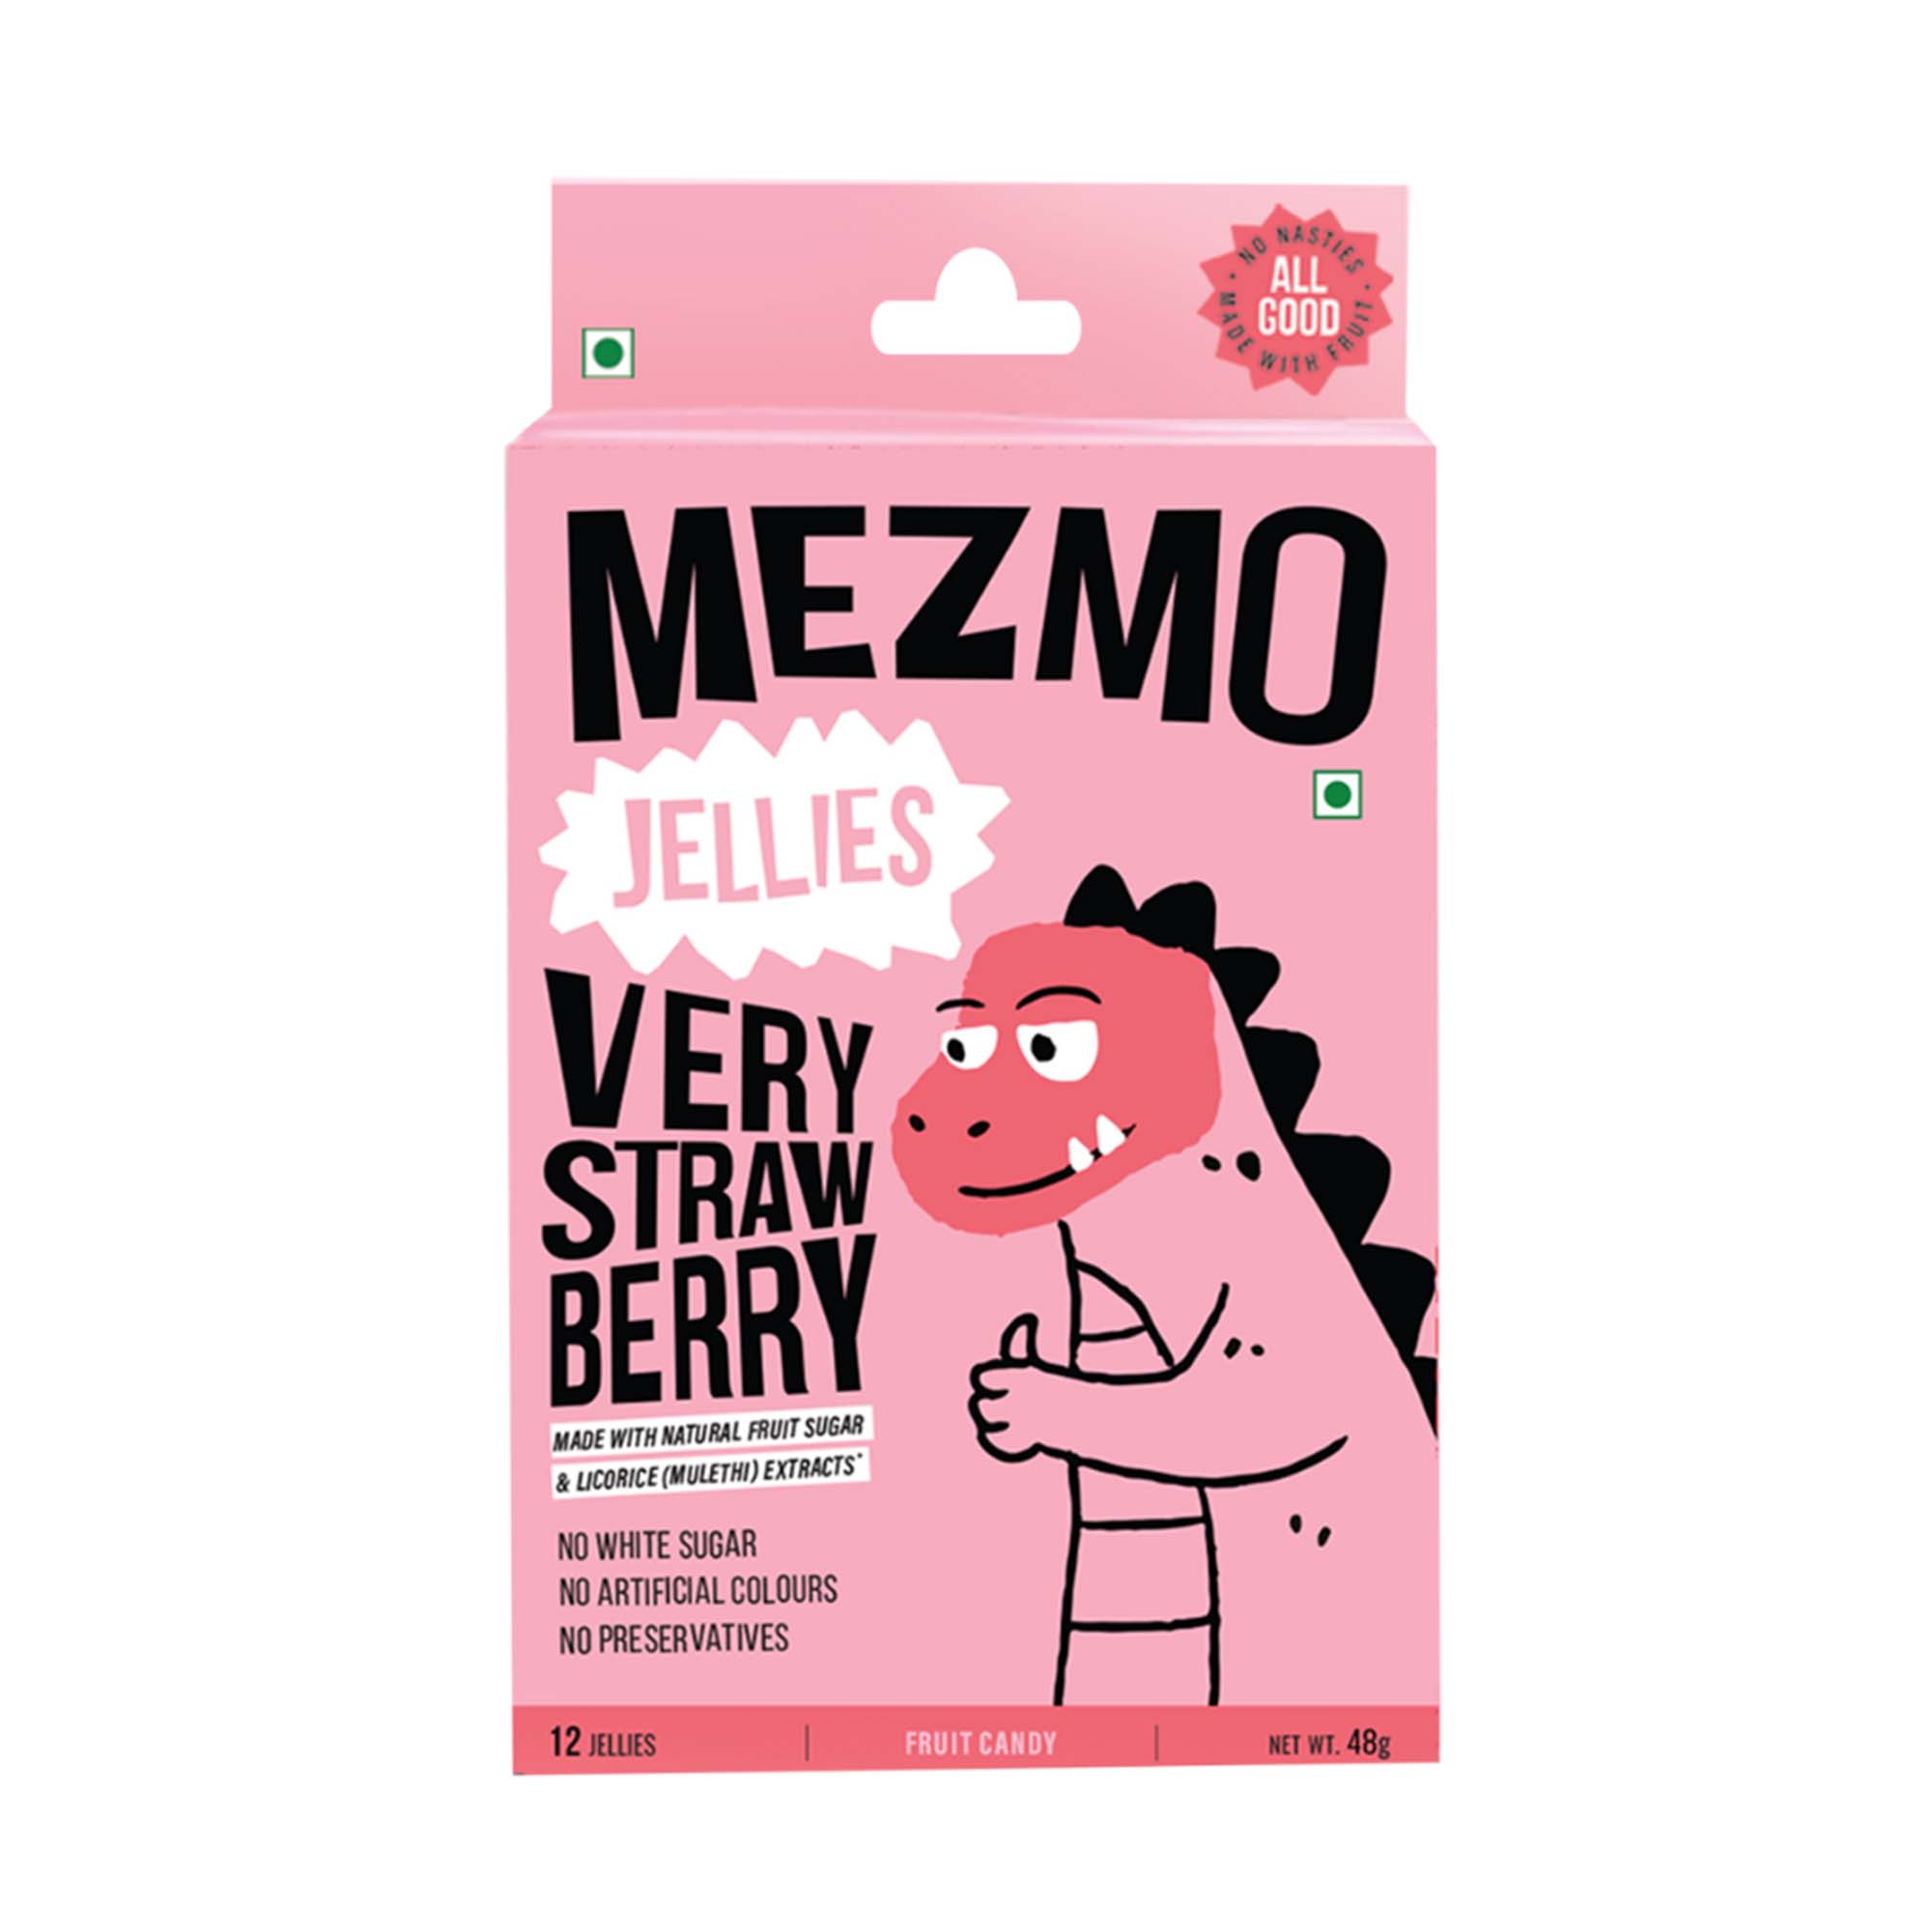 Mezmo Zazzy Gift Box Pack of 3 ( 36 Jellies)